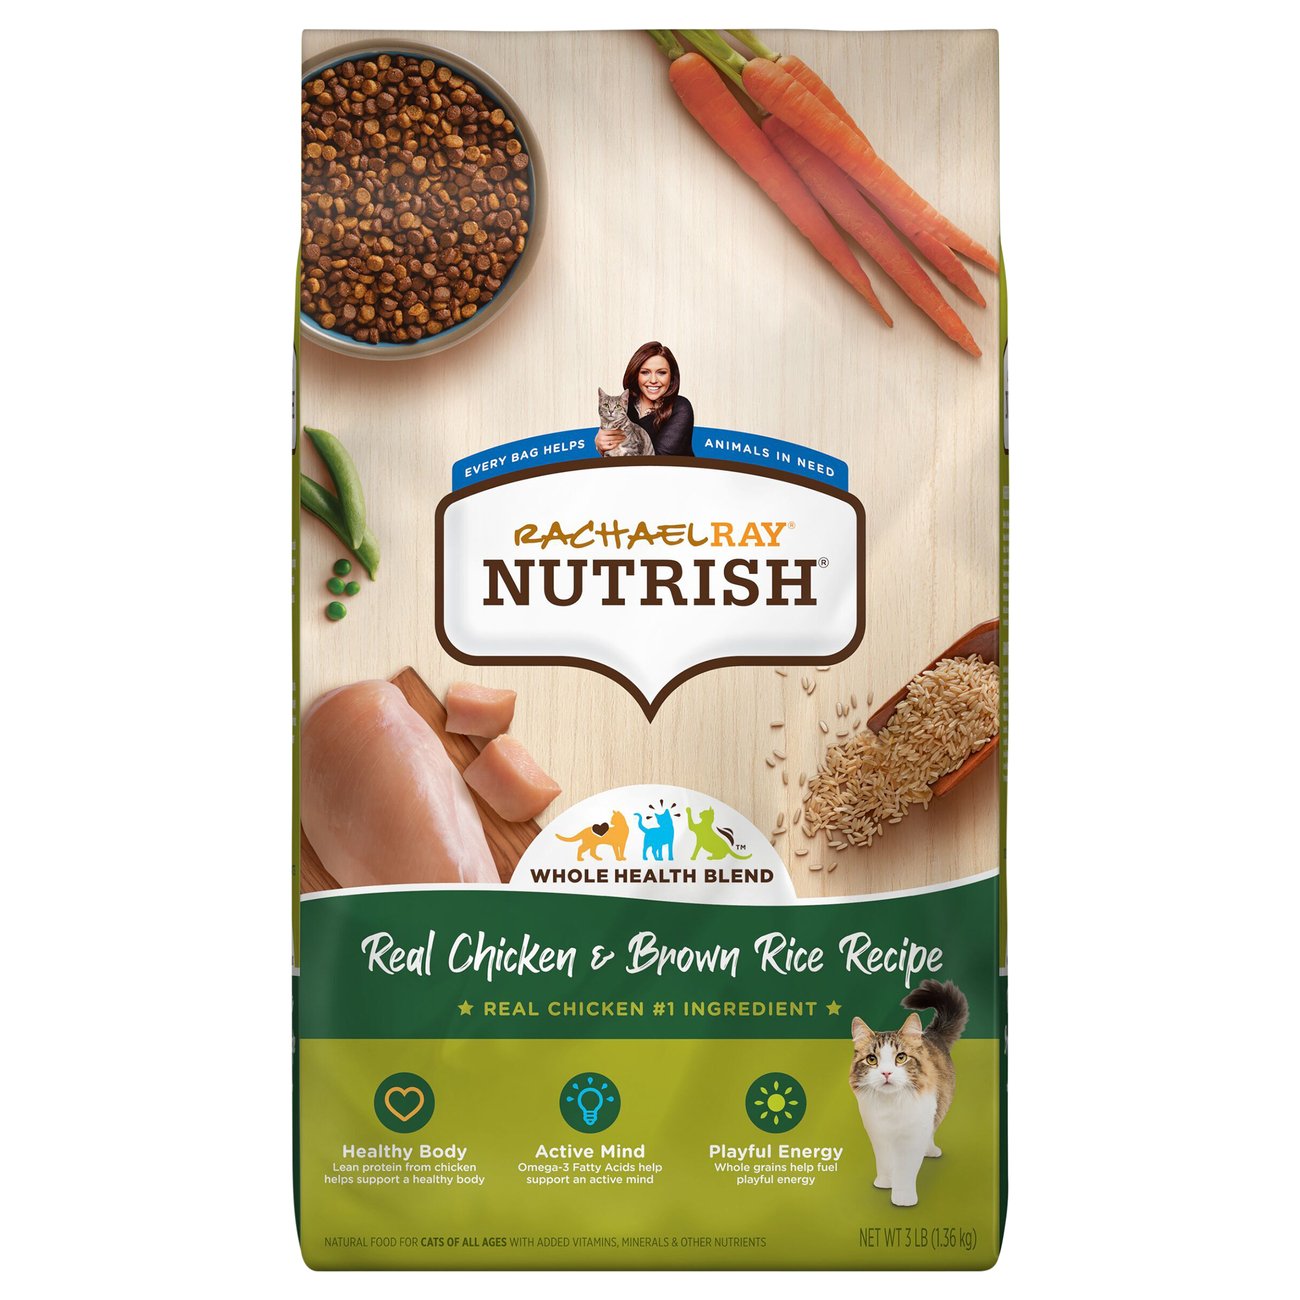 rachel ray nutrish dry cat food